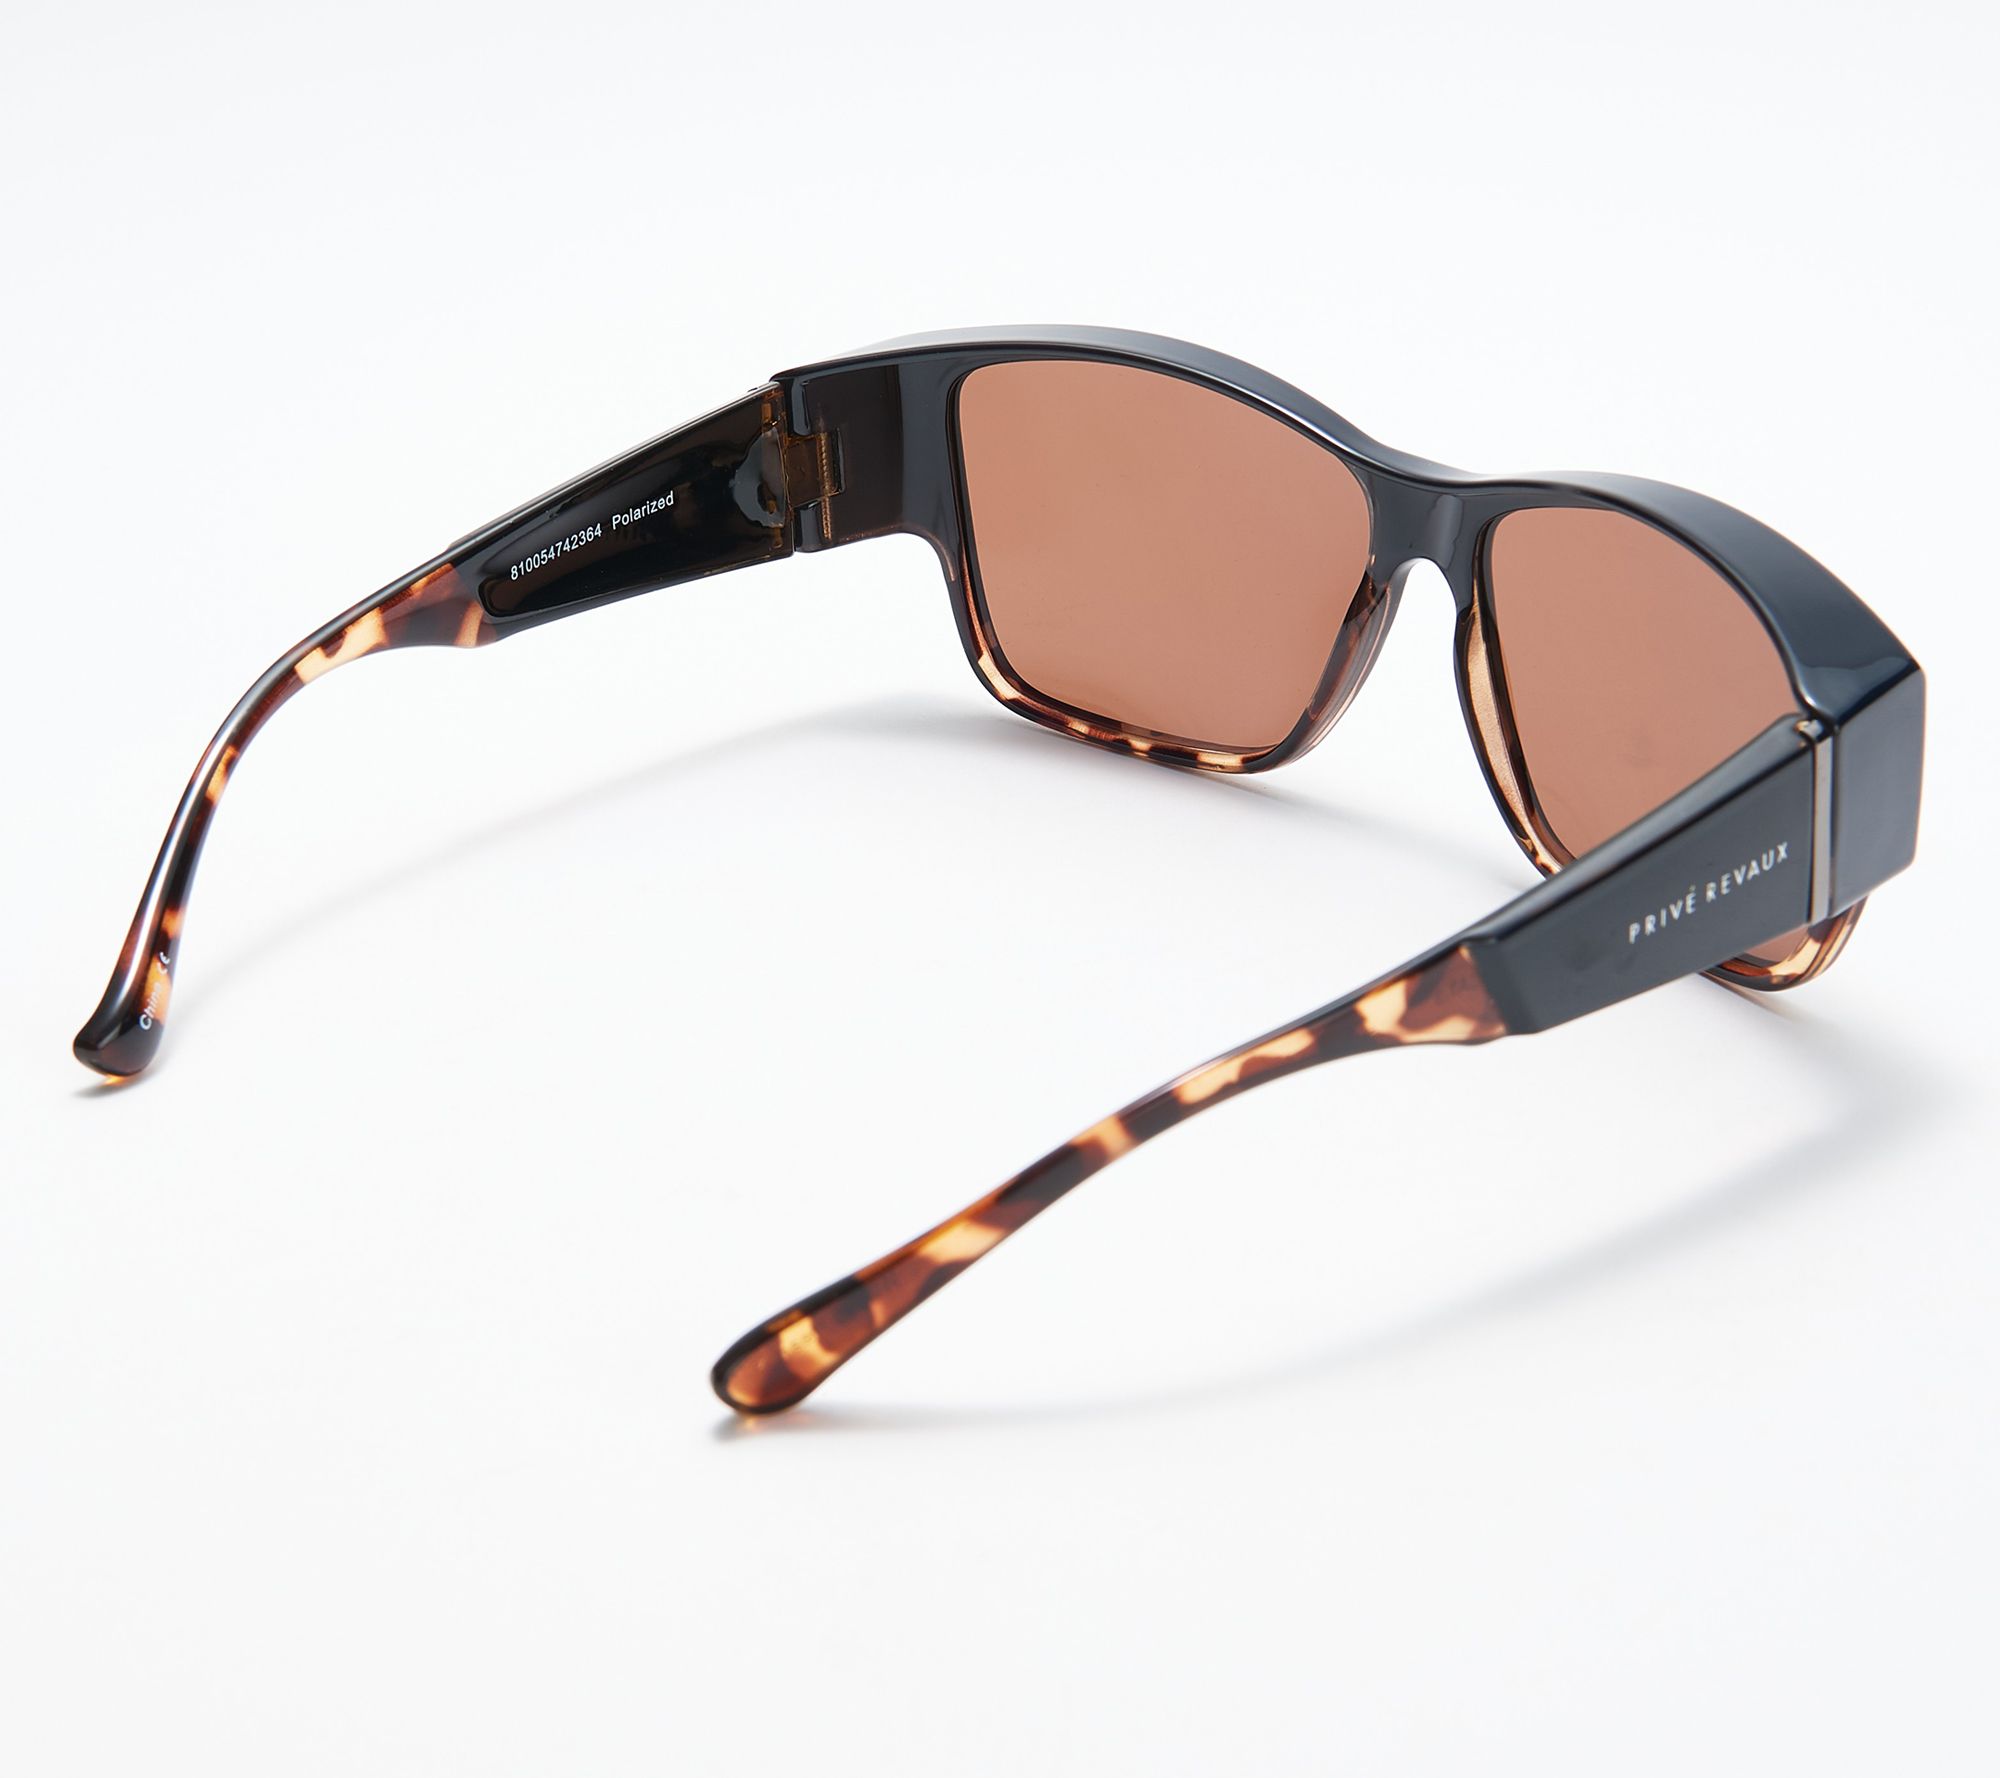 Prive The Fit Fitover Sunglasses - QVC.com